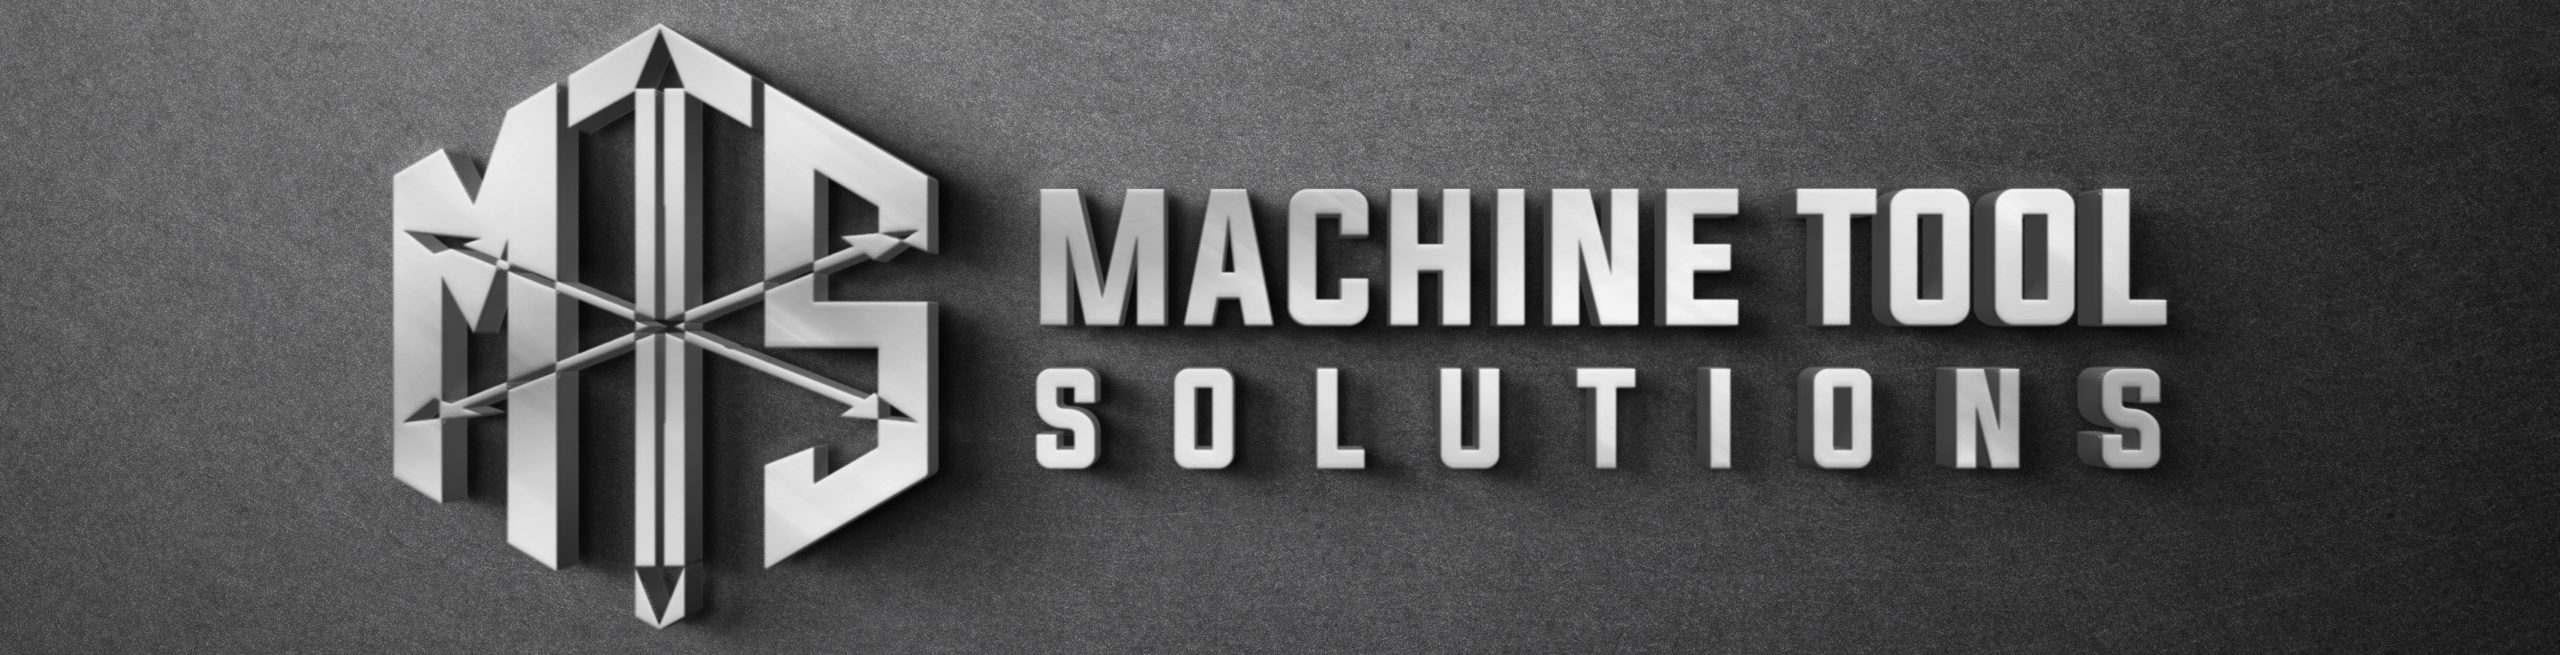 Machine Tool Solutions